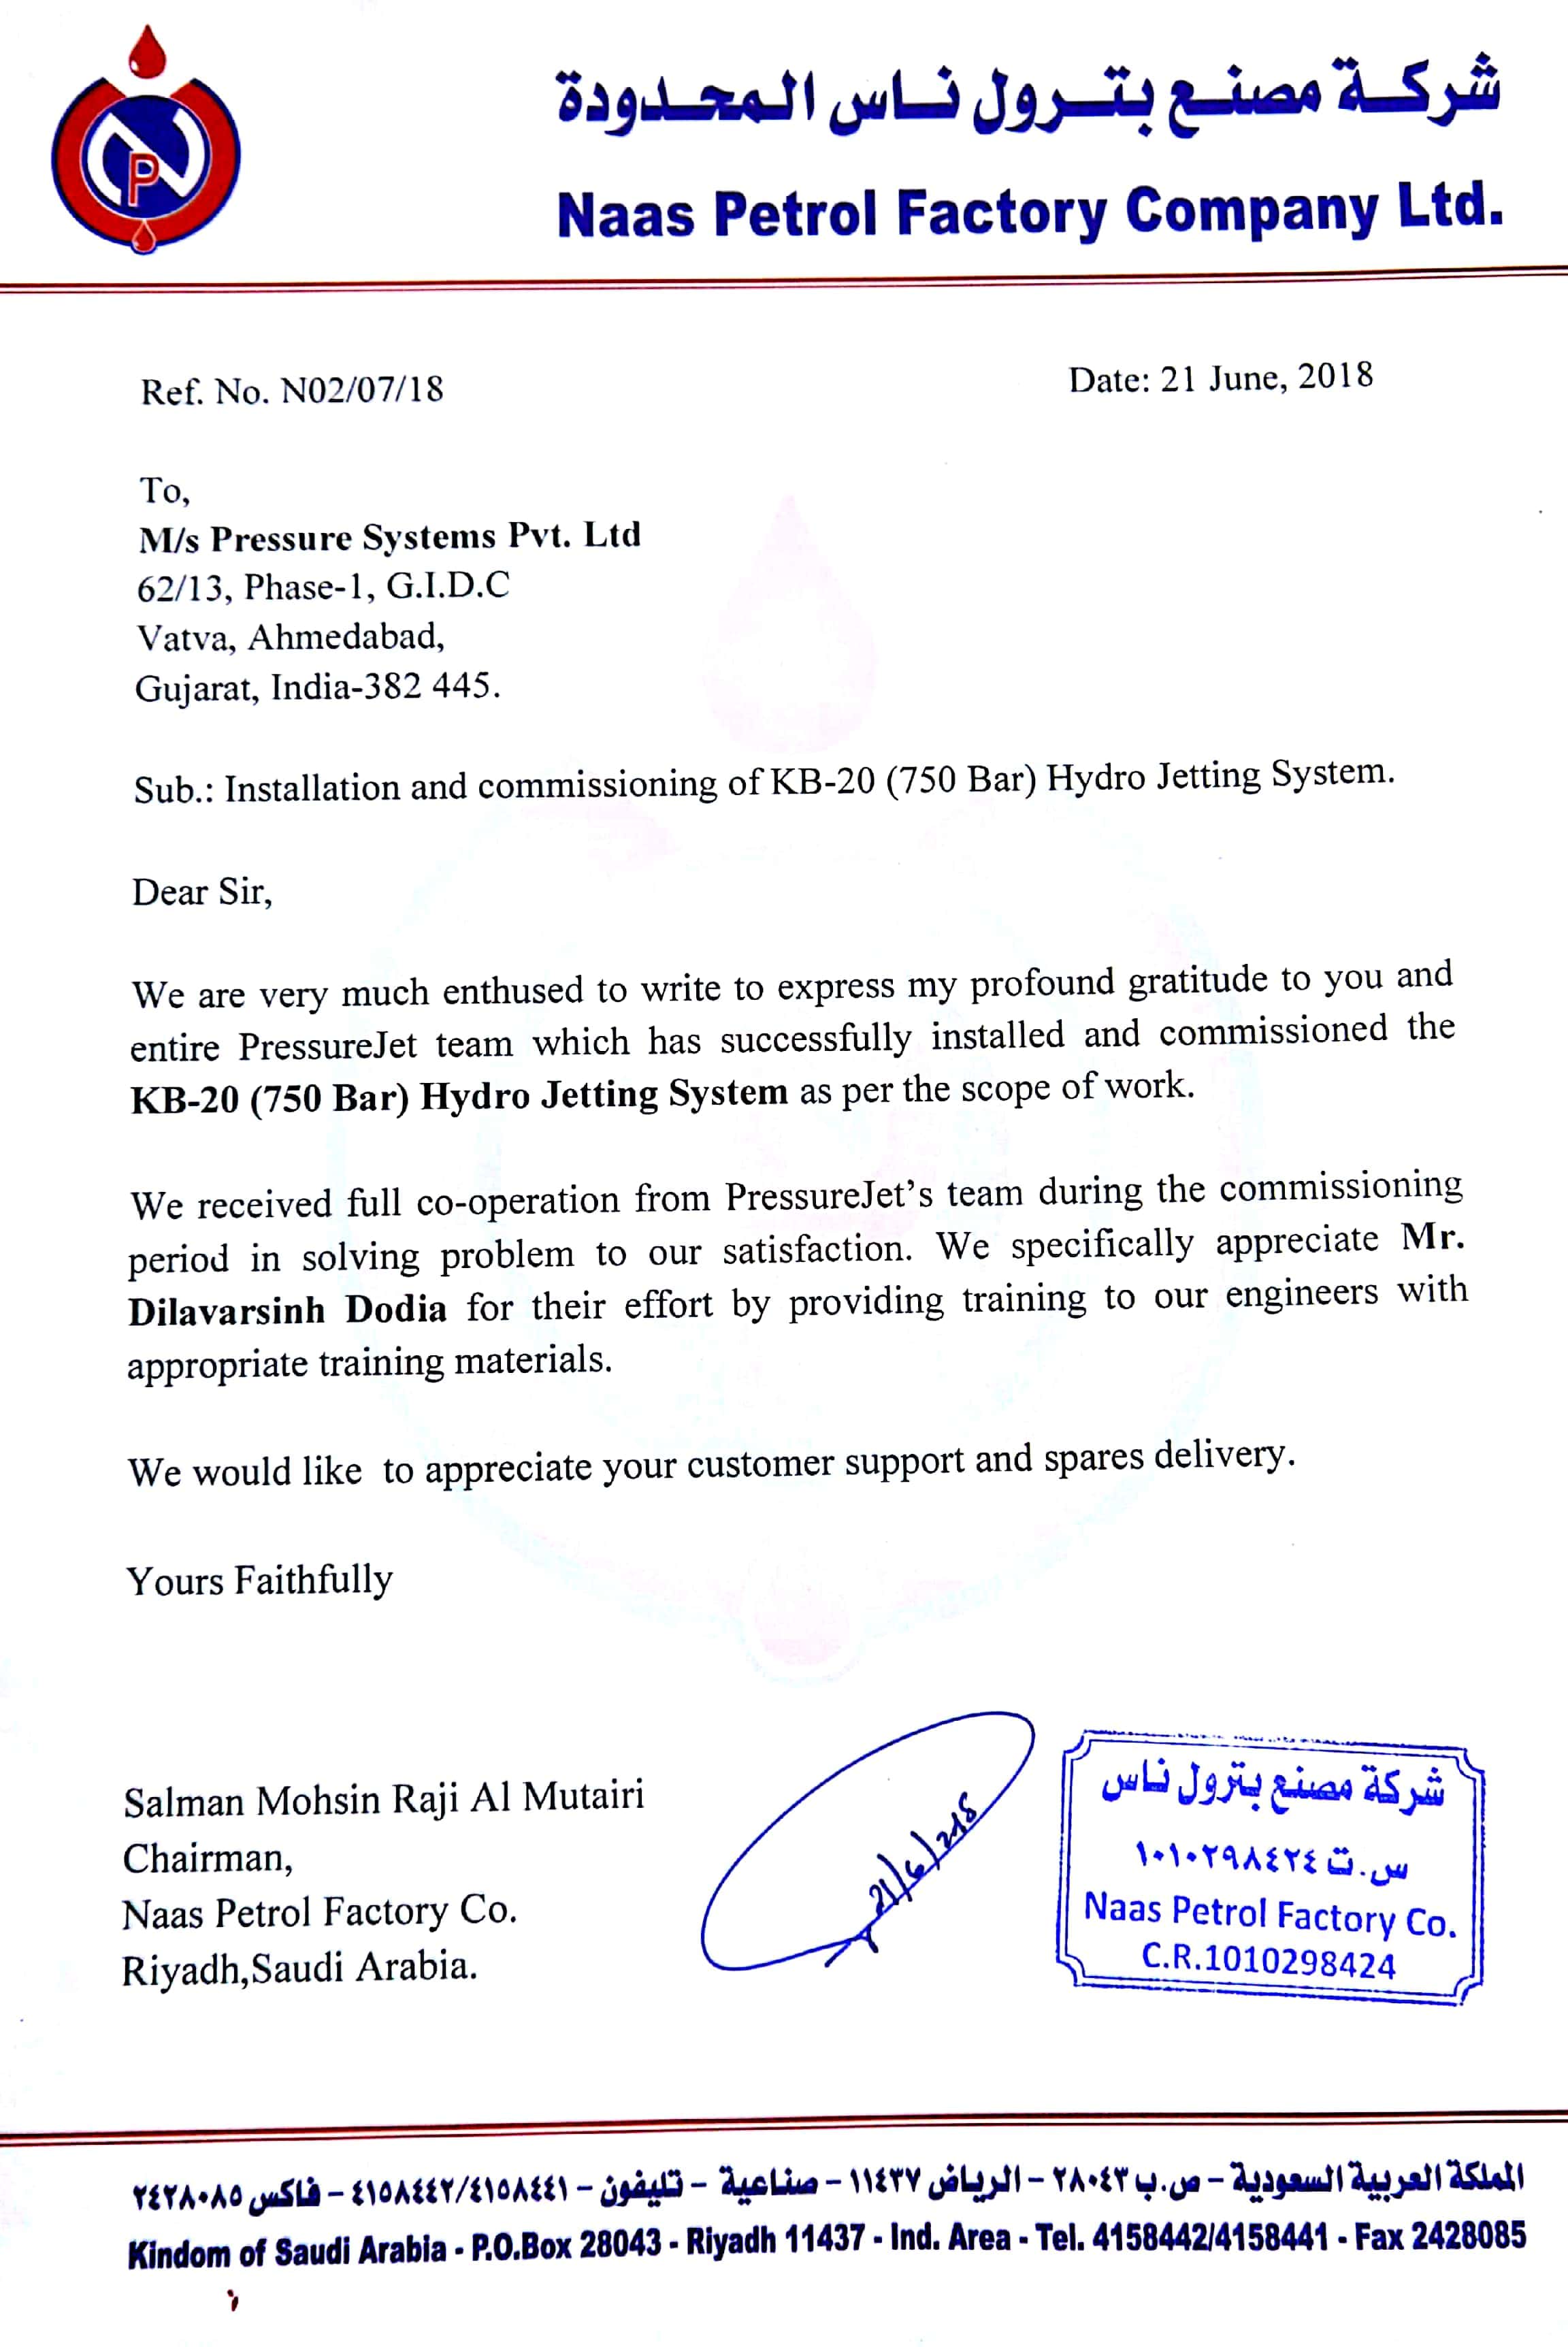 Naas Petrol Factory Company Ltd.- Saudi Arabia (Letter of appreciation certificate)